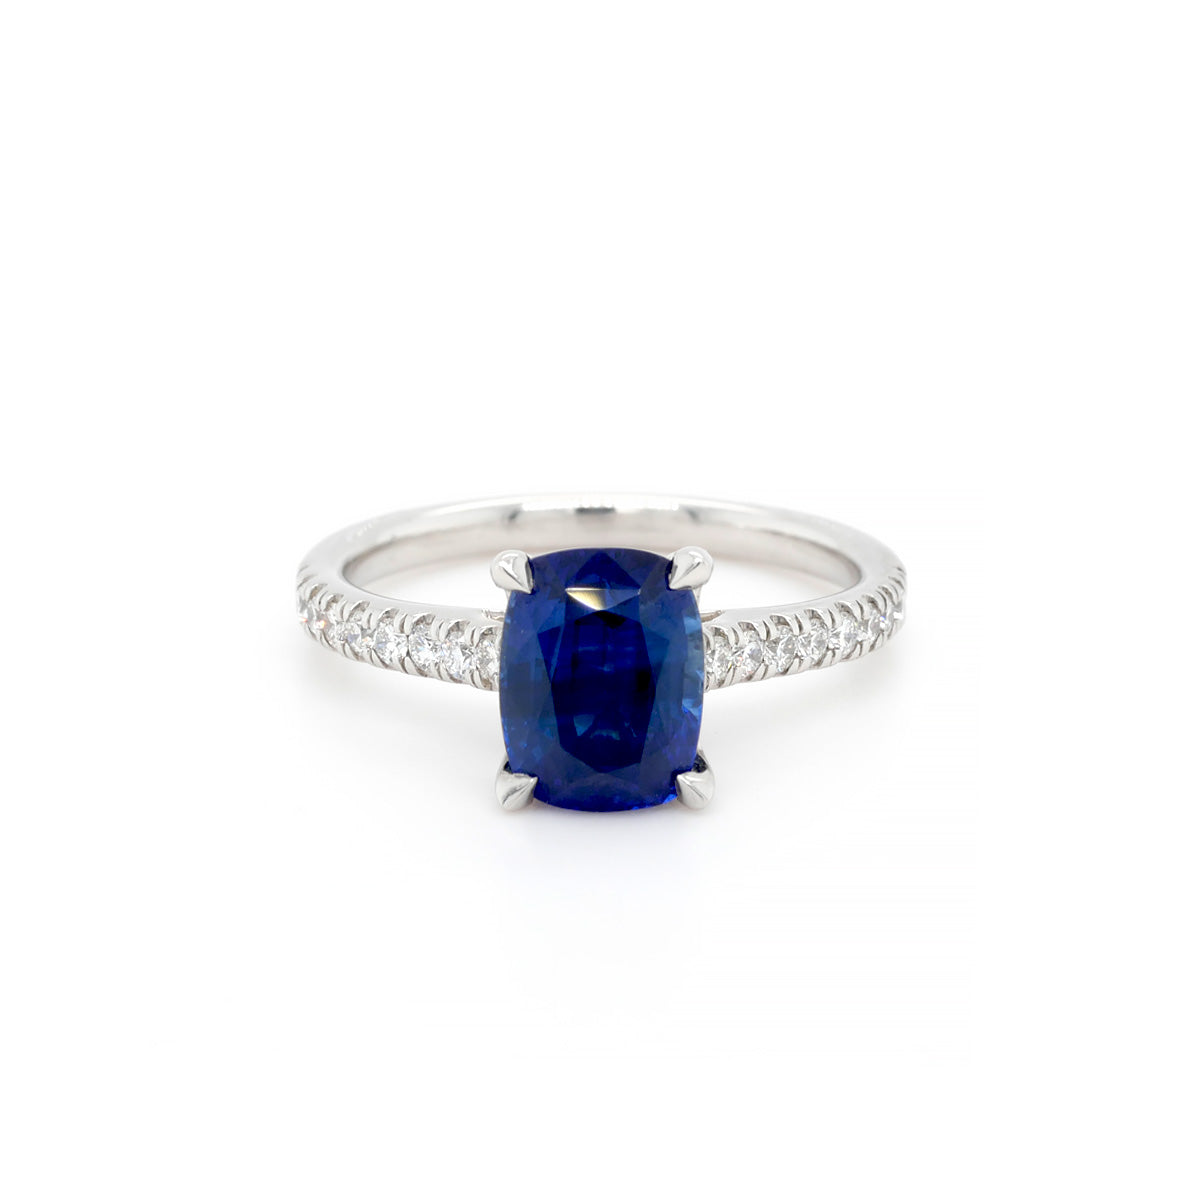 Platinum Single Stone Cushion Cut Sapphire Ring with Round Diamond Set Shoulders